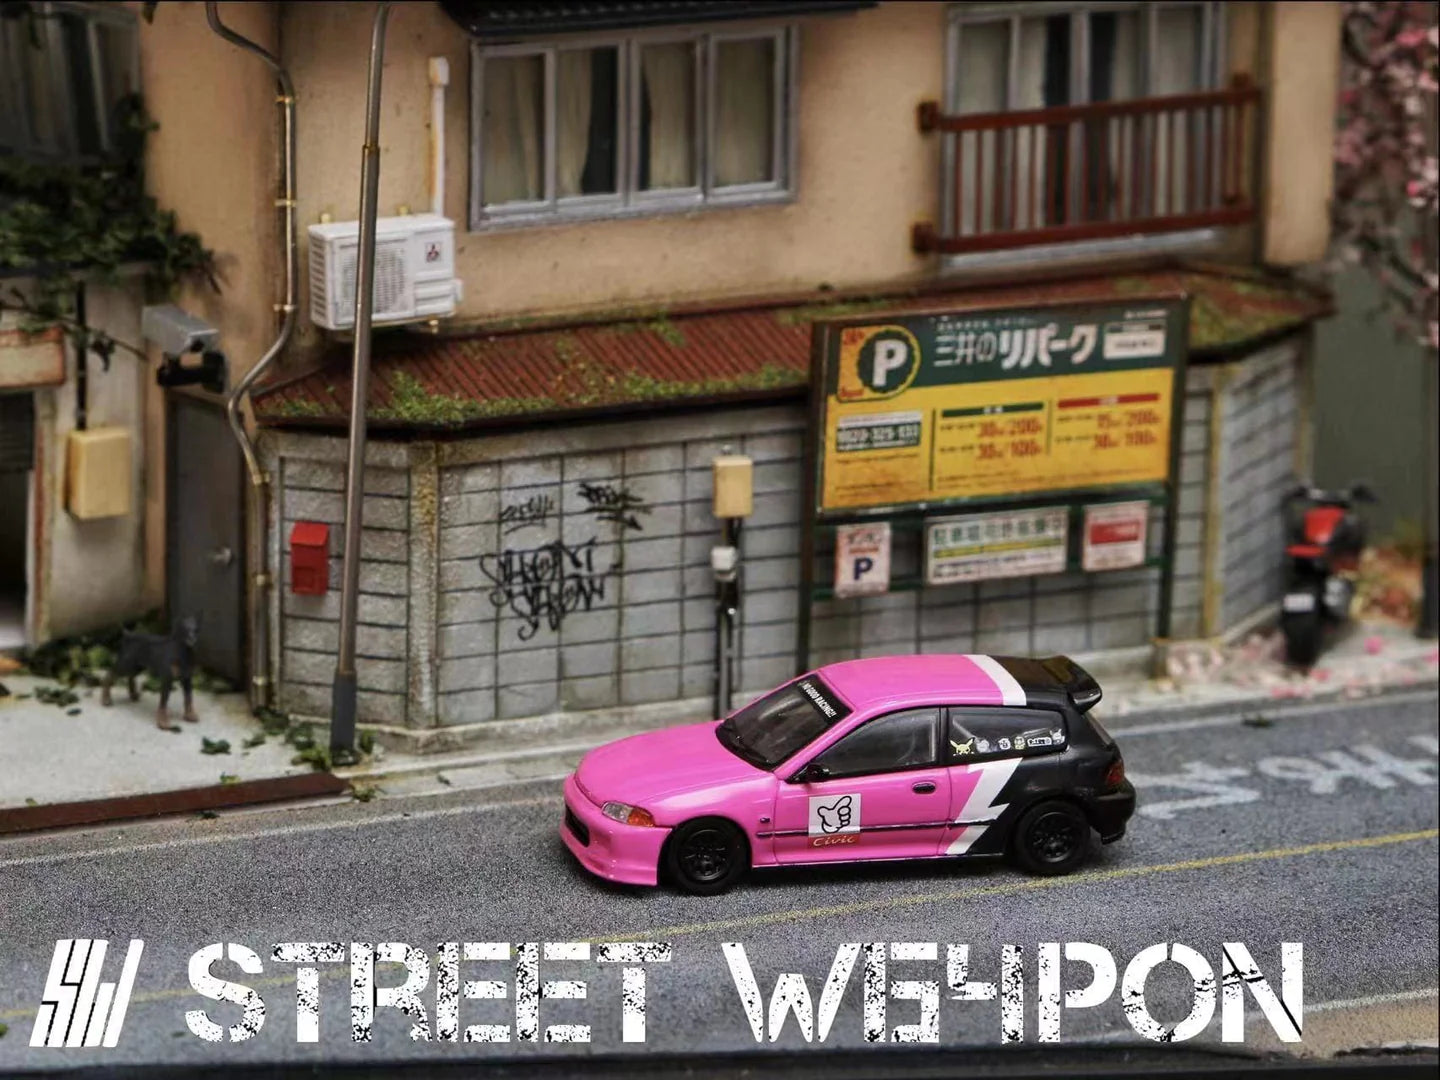 Street Weapon 1/64 Honda Civic EG6 "No Good Racing" Pink